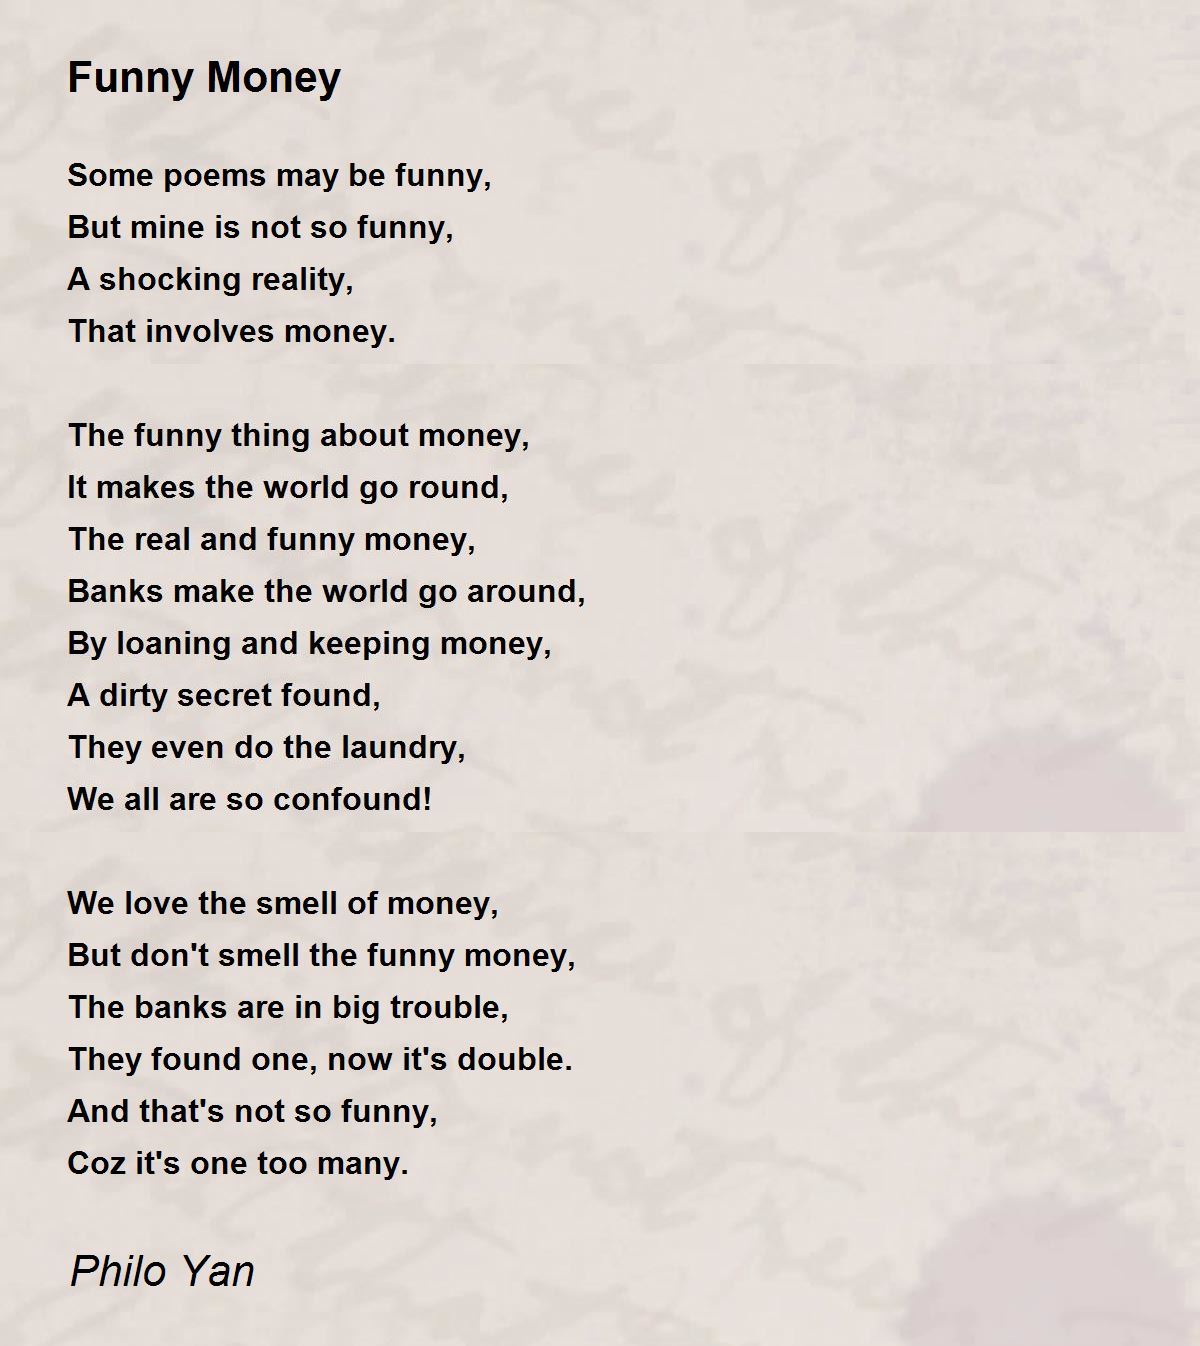 Funny Money - Funny Money Poem by Philo Yan